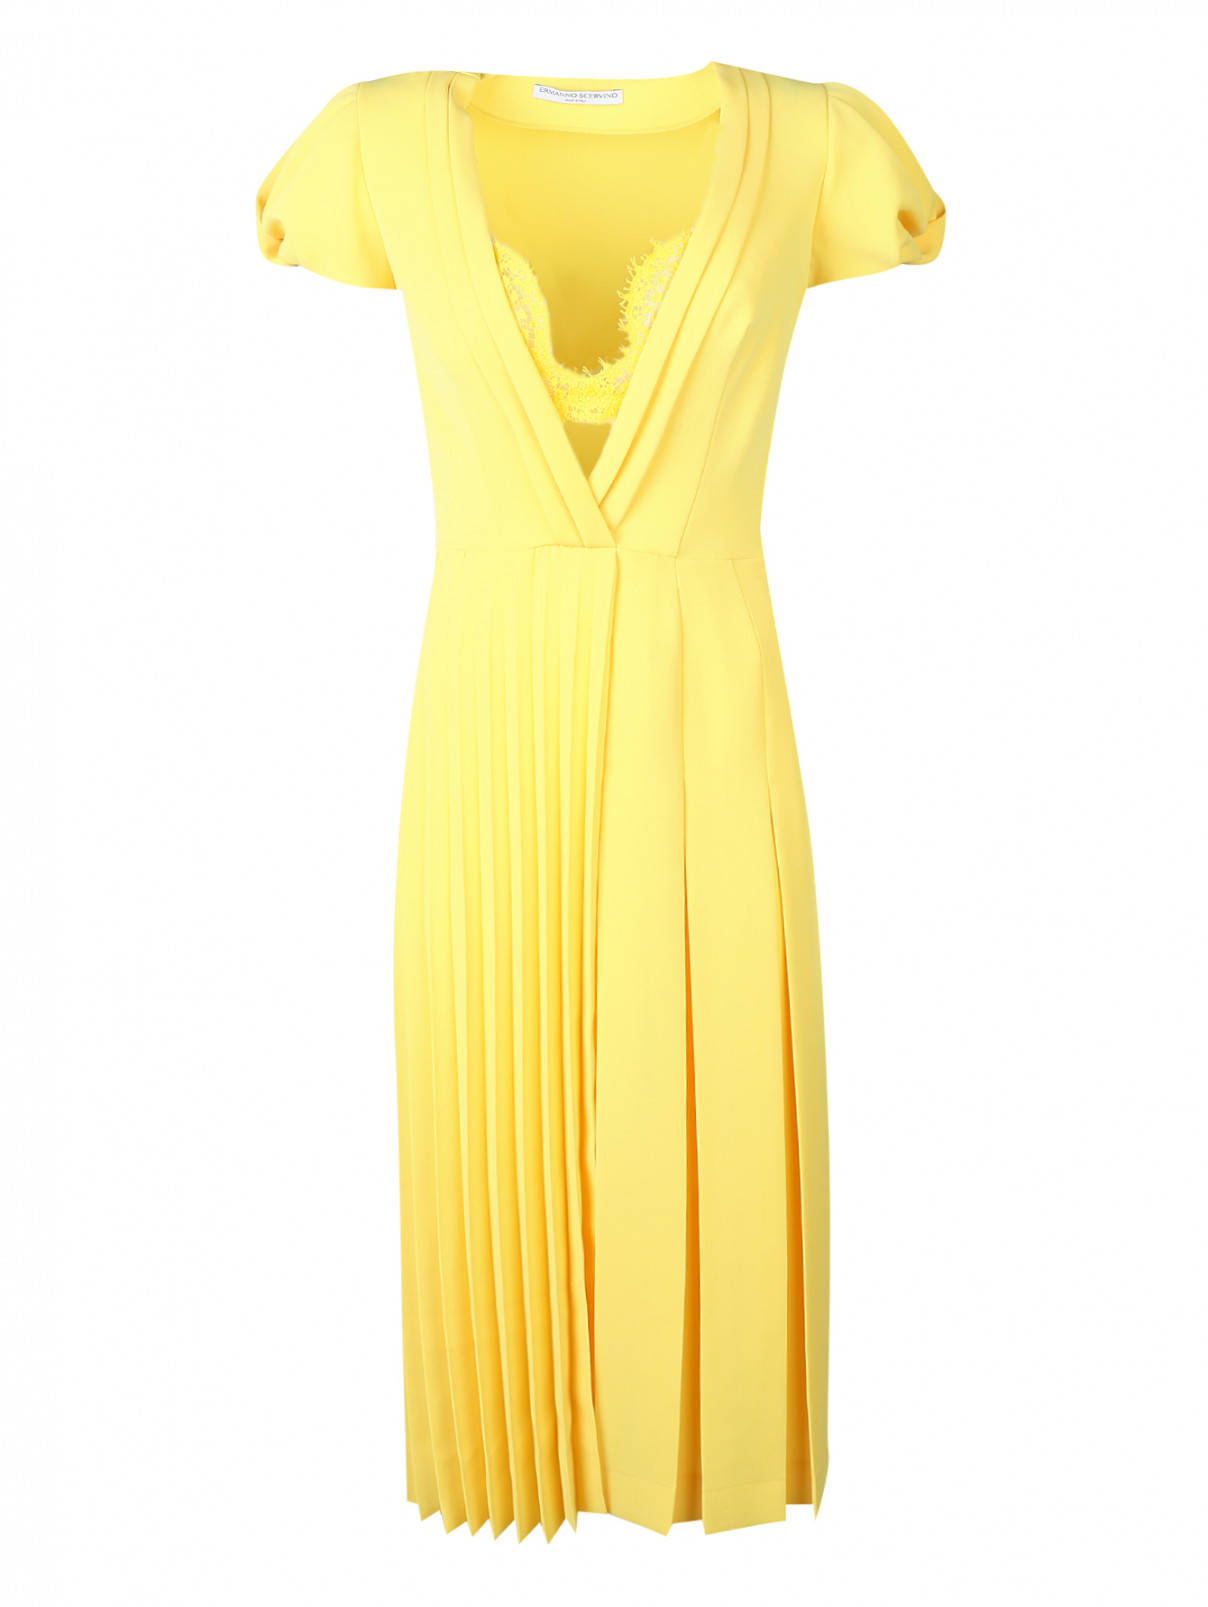 Платье-миди из шелка Ermanno Scervino  –  Общий вид  – Цвет:  Желтый